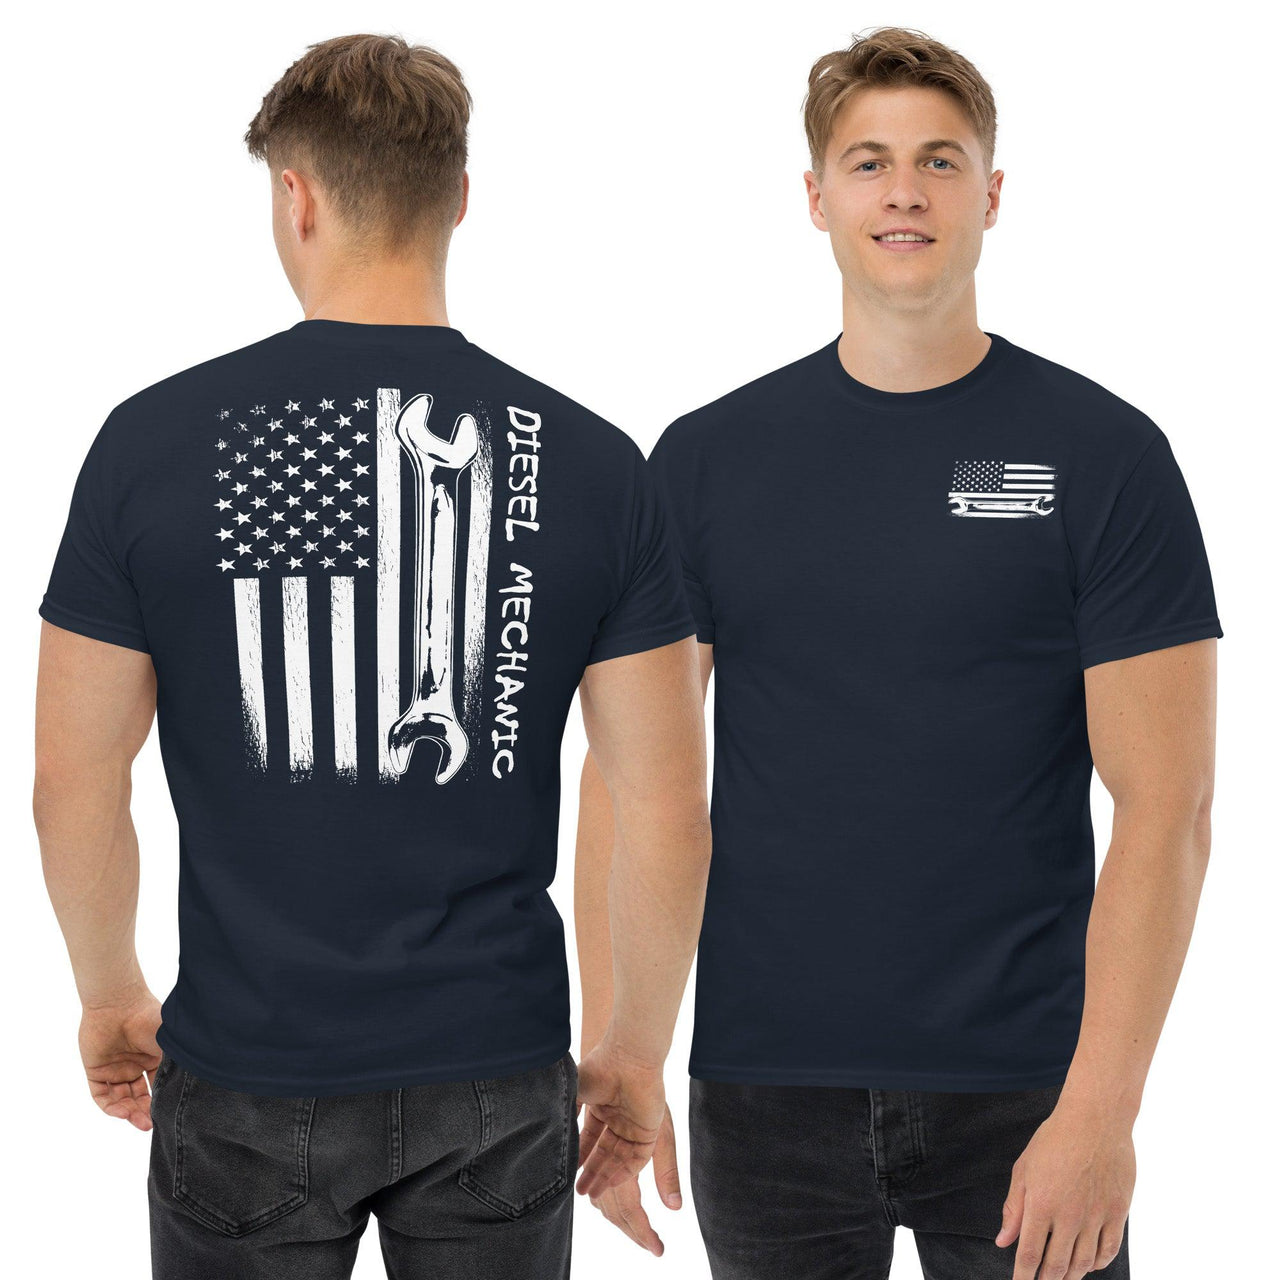 Diesel Mechanic American Flag T-Shirt modeled in navy